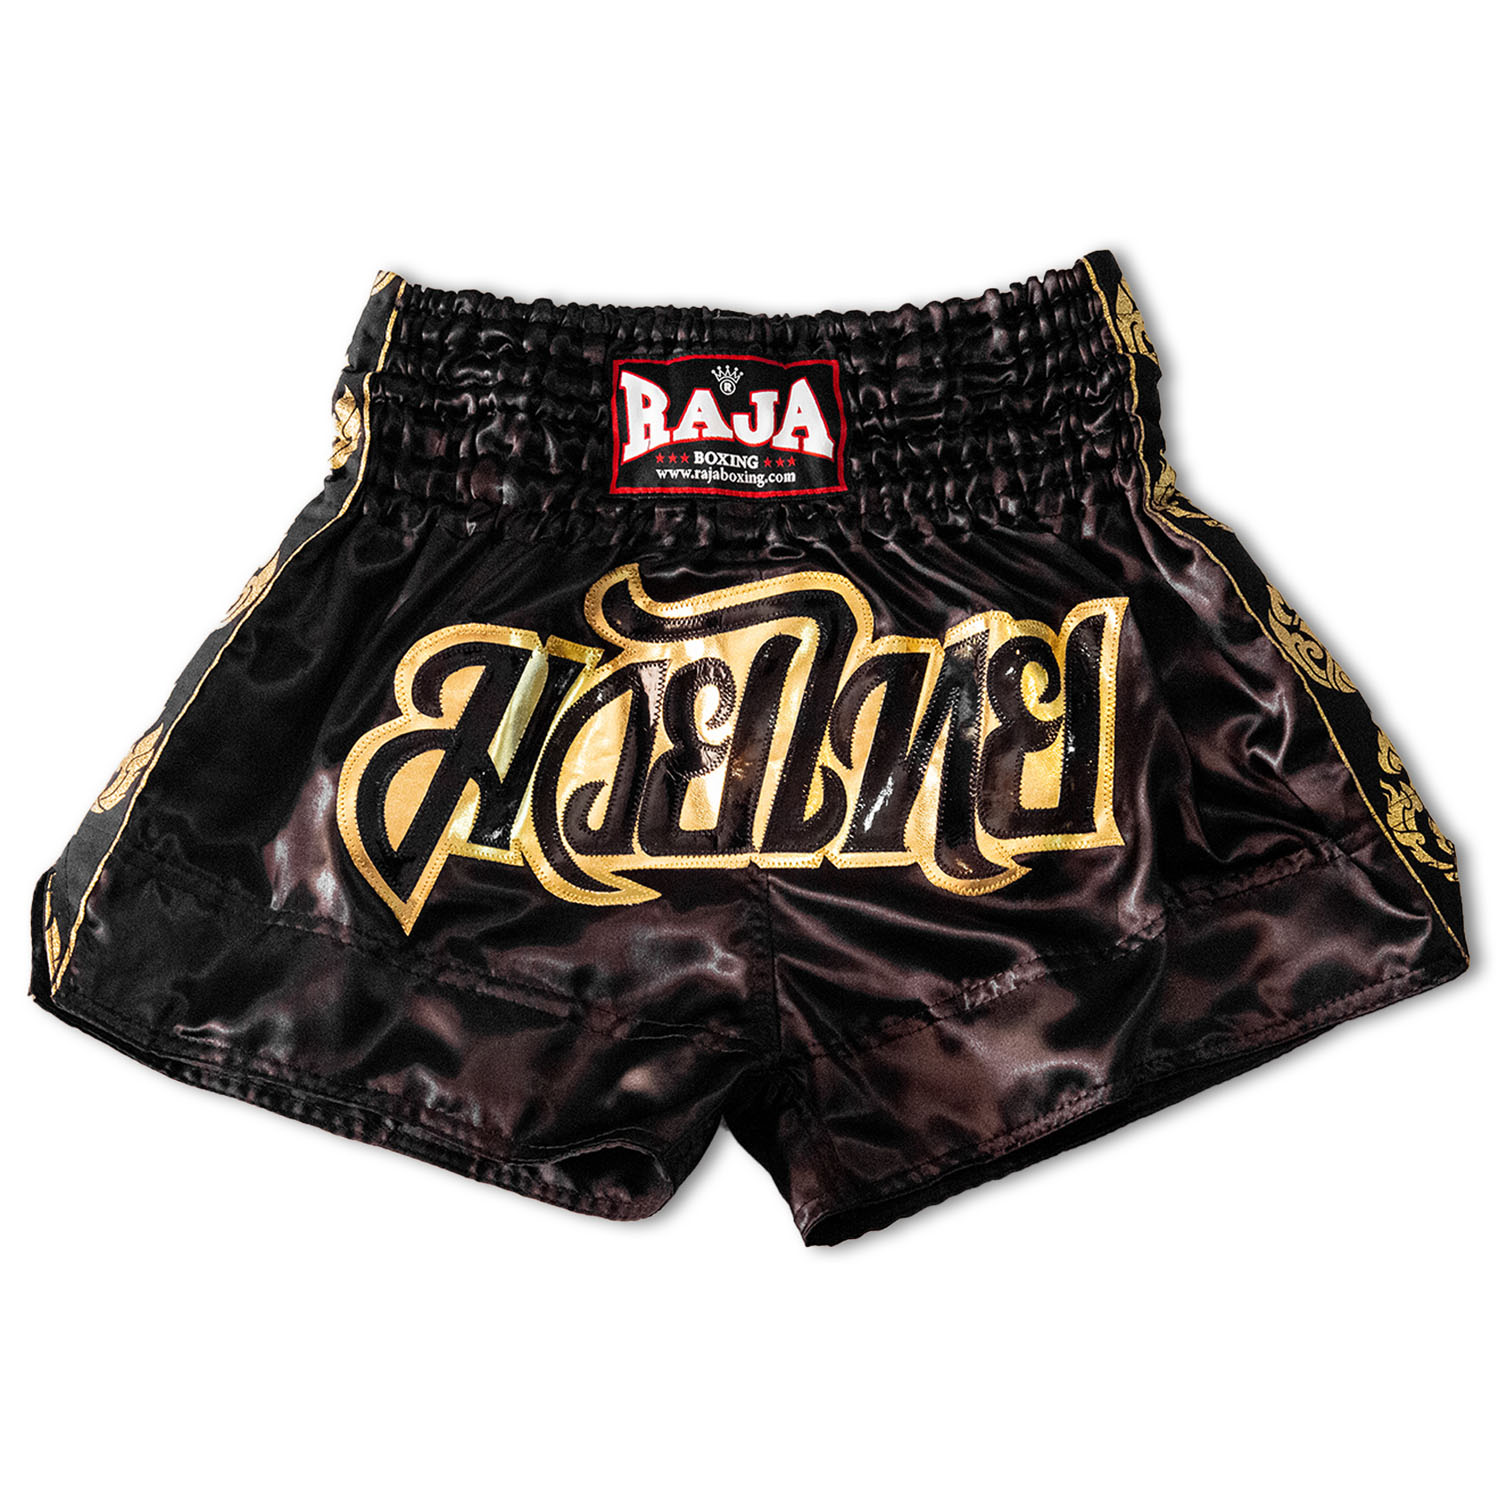 RAJA Boxing Muay Thai Shorts, Lai Thai, black